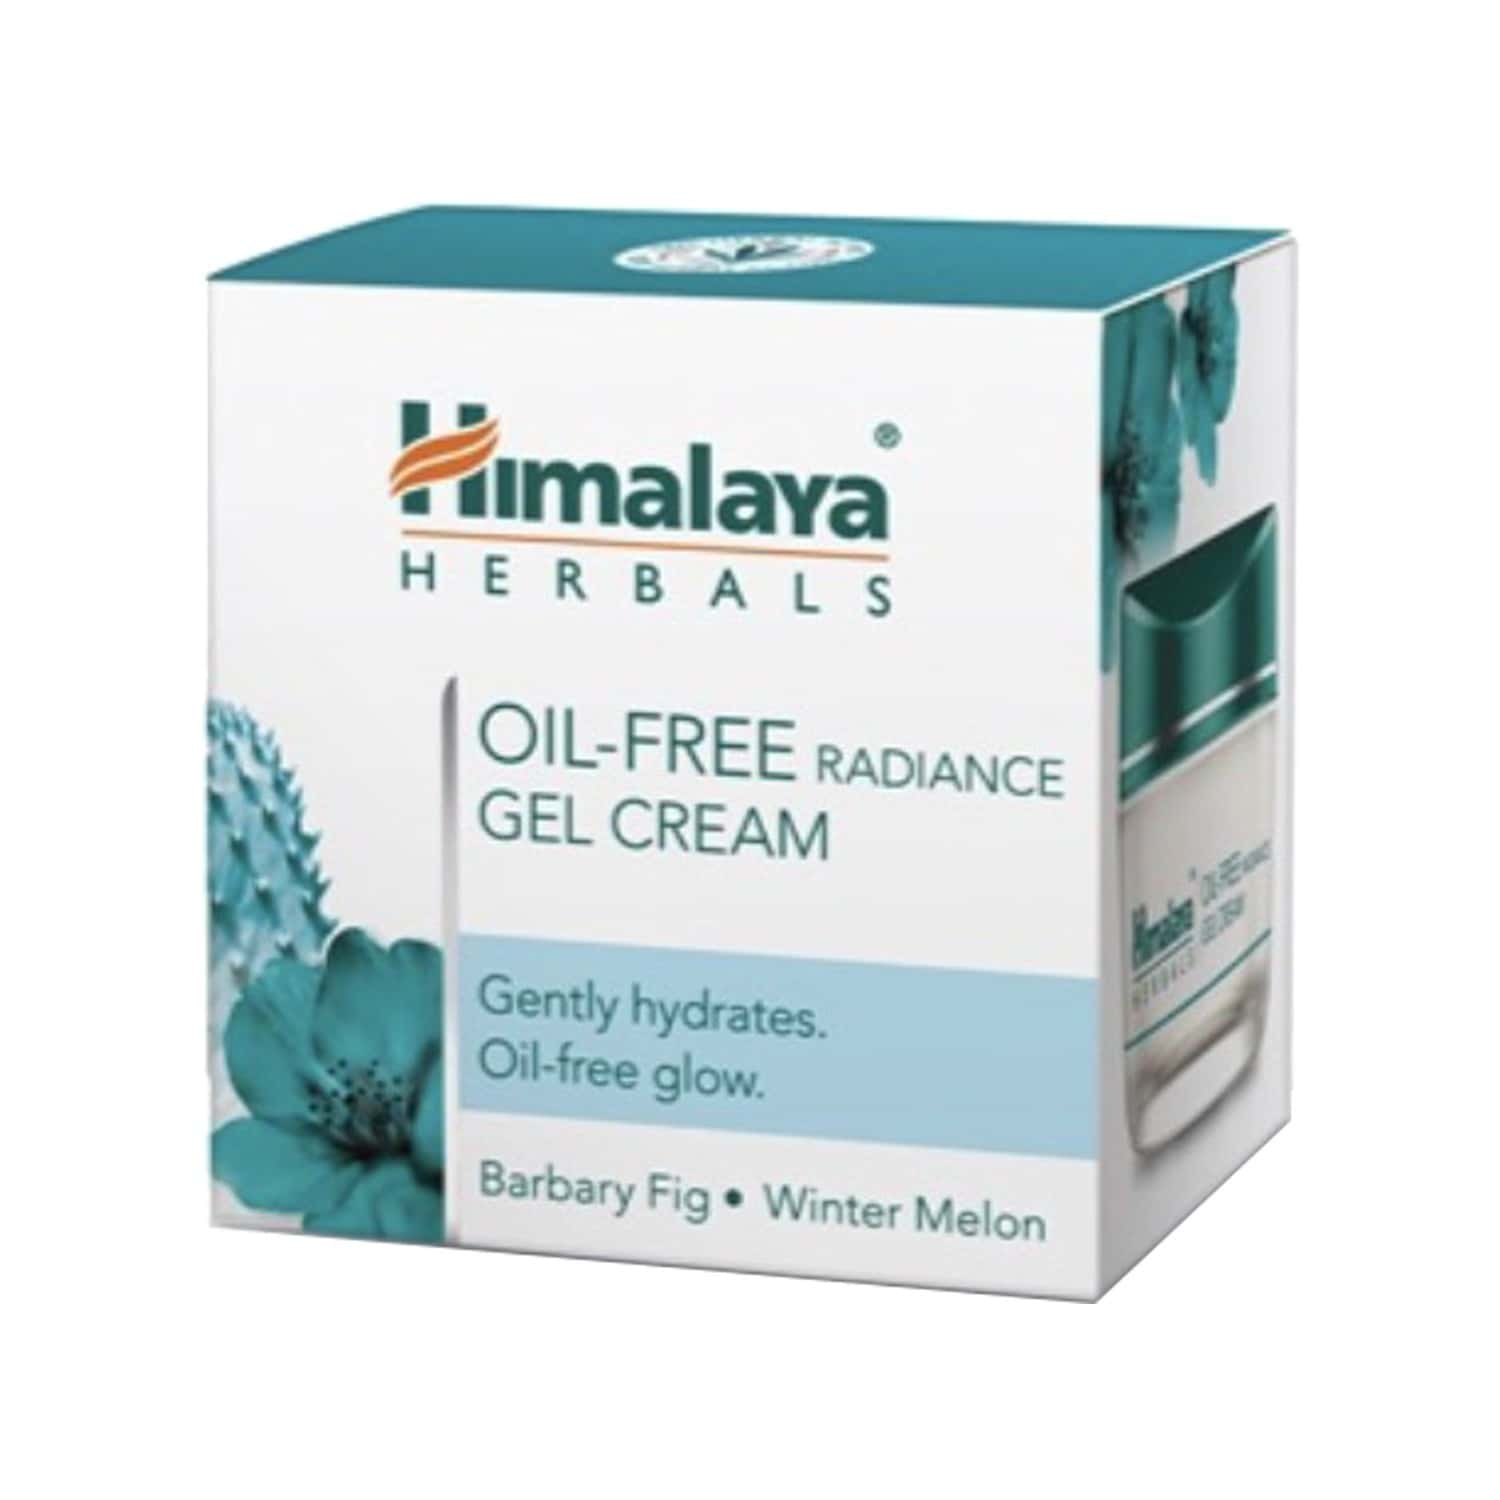 Himalaya Oil-Free Radiance Gel Cream, 50 gm, Pack of 1 